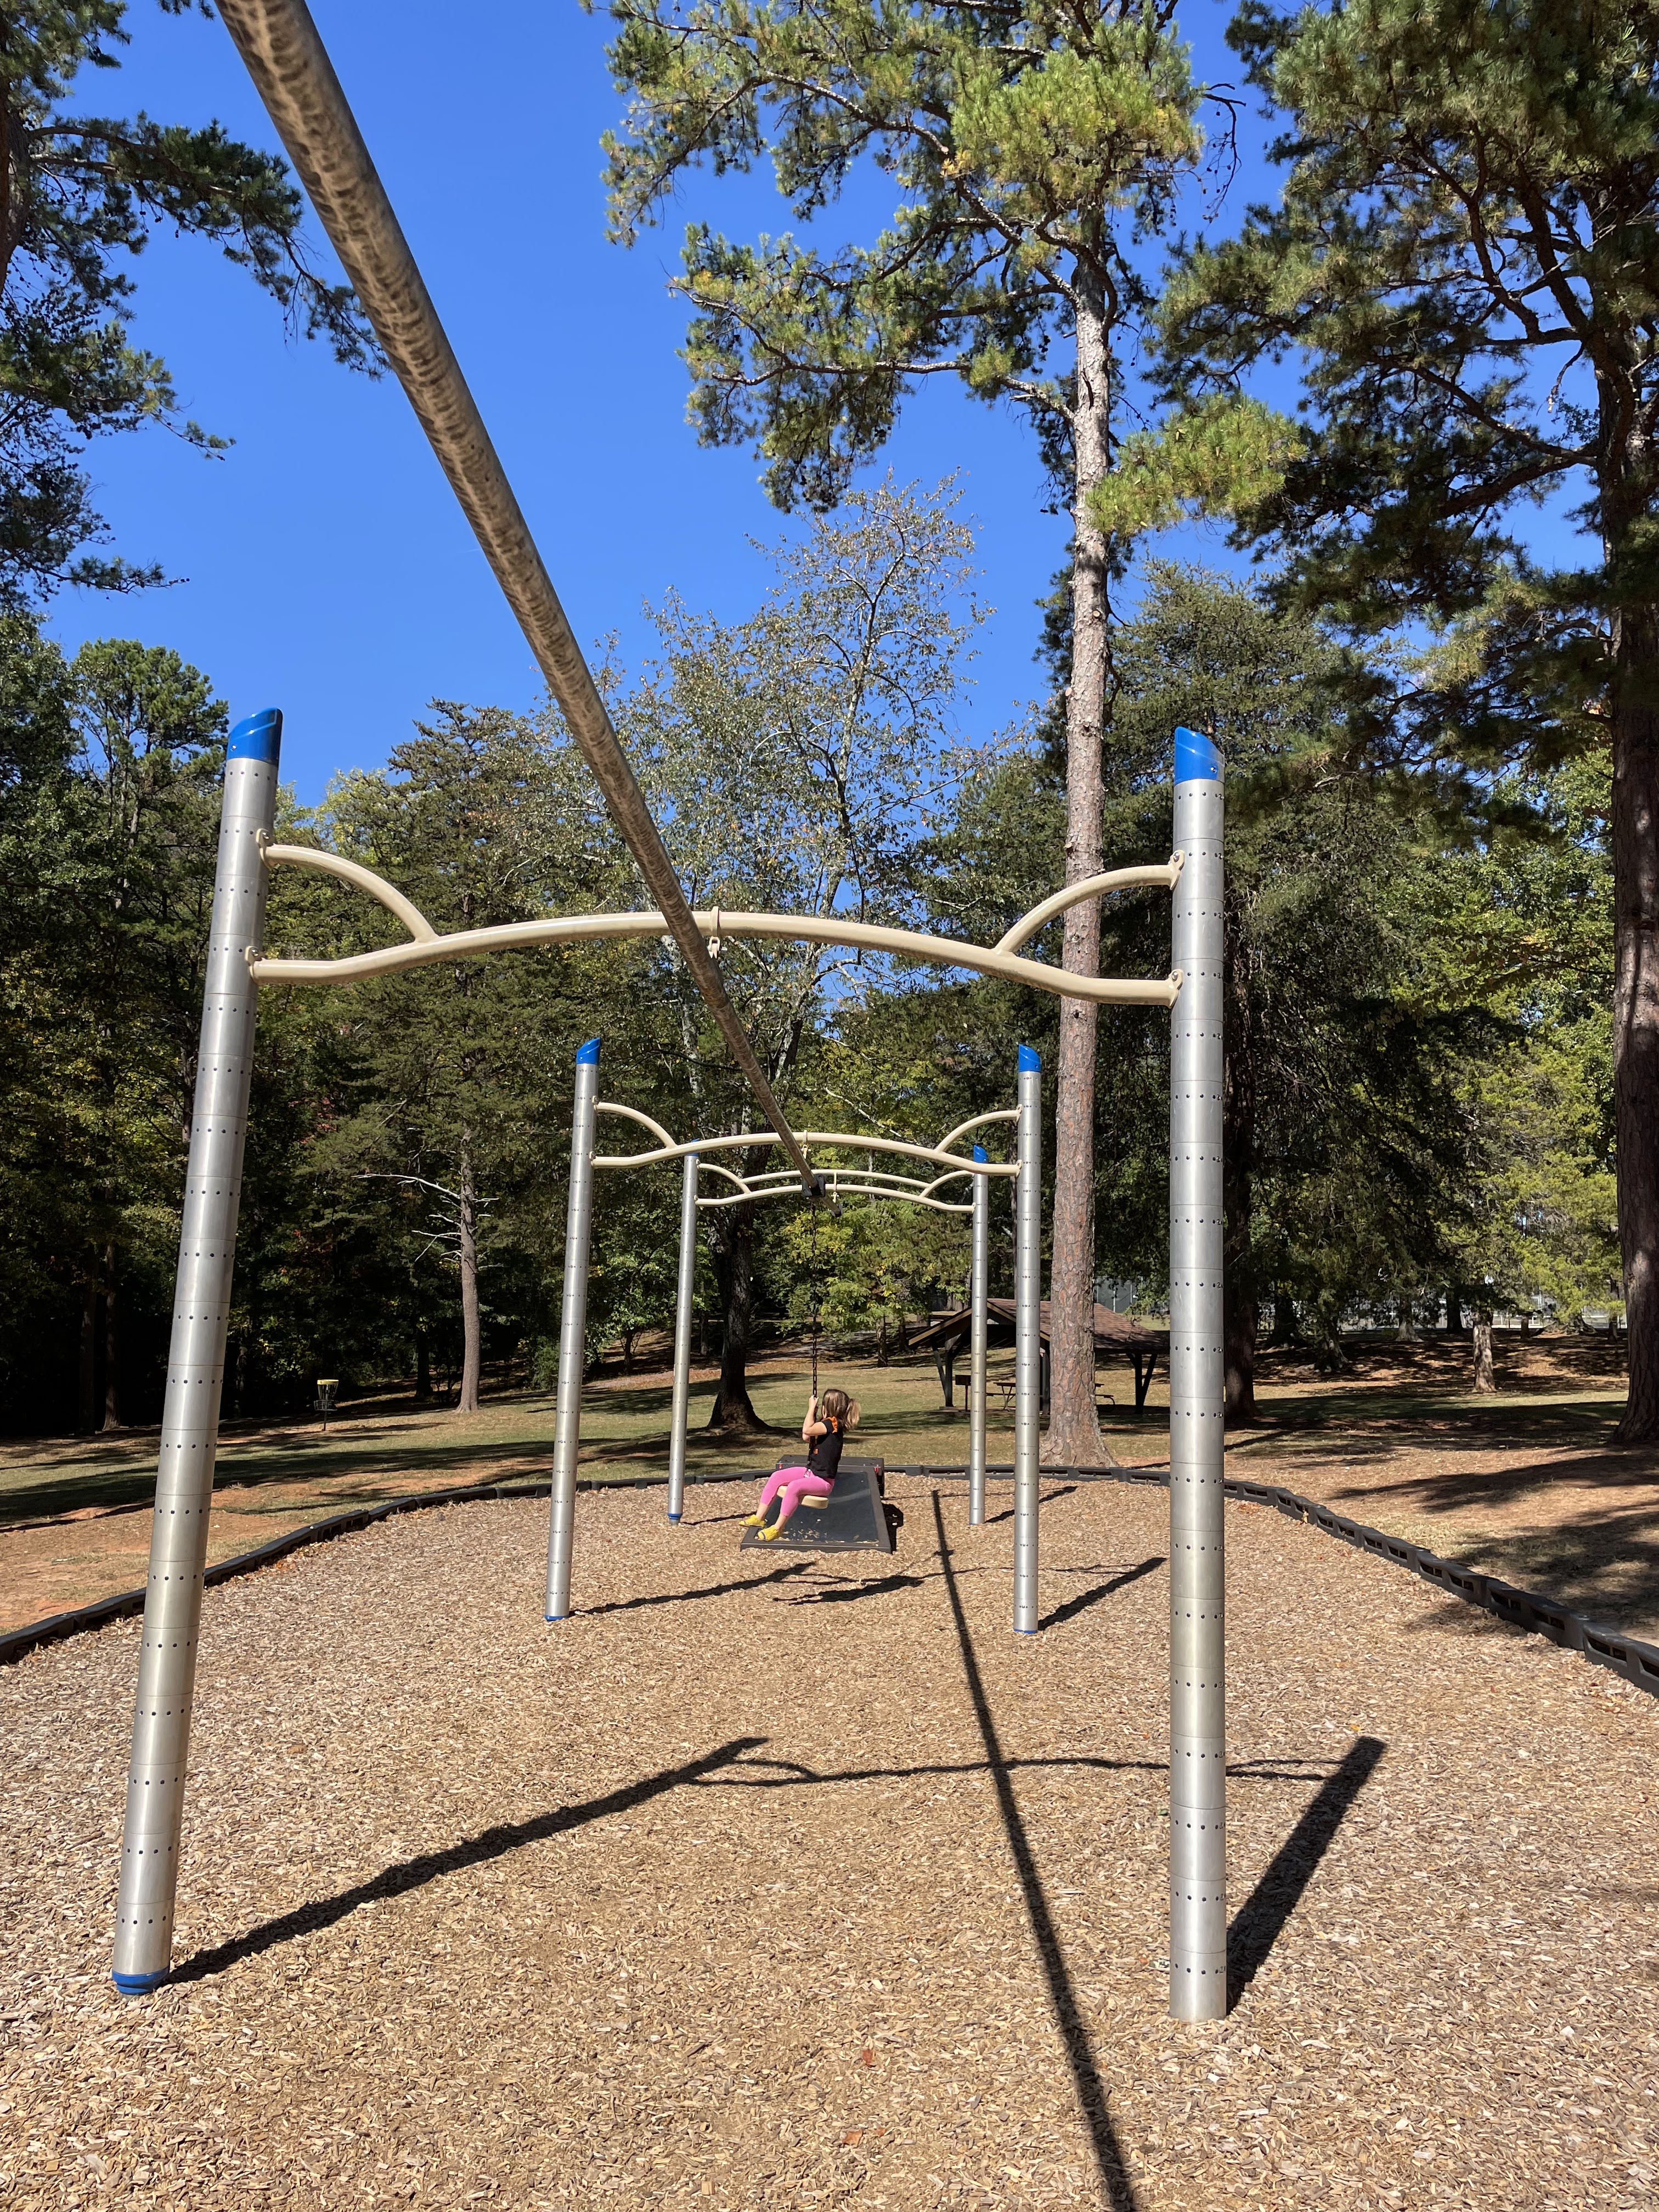 Zipline at Gower Park, Greenville, SC